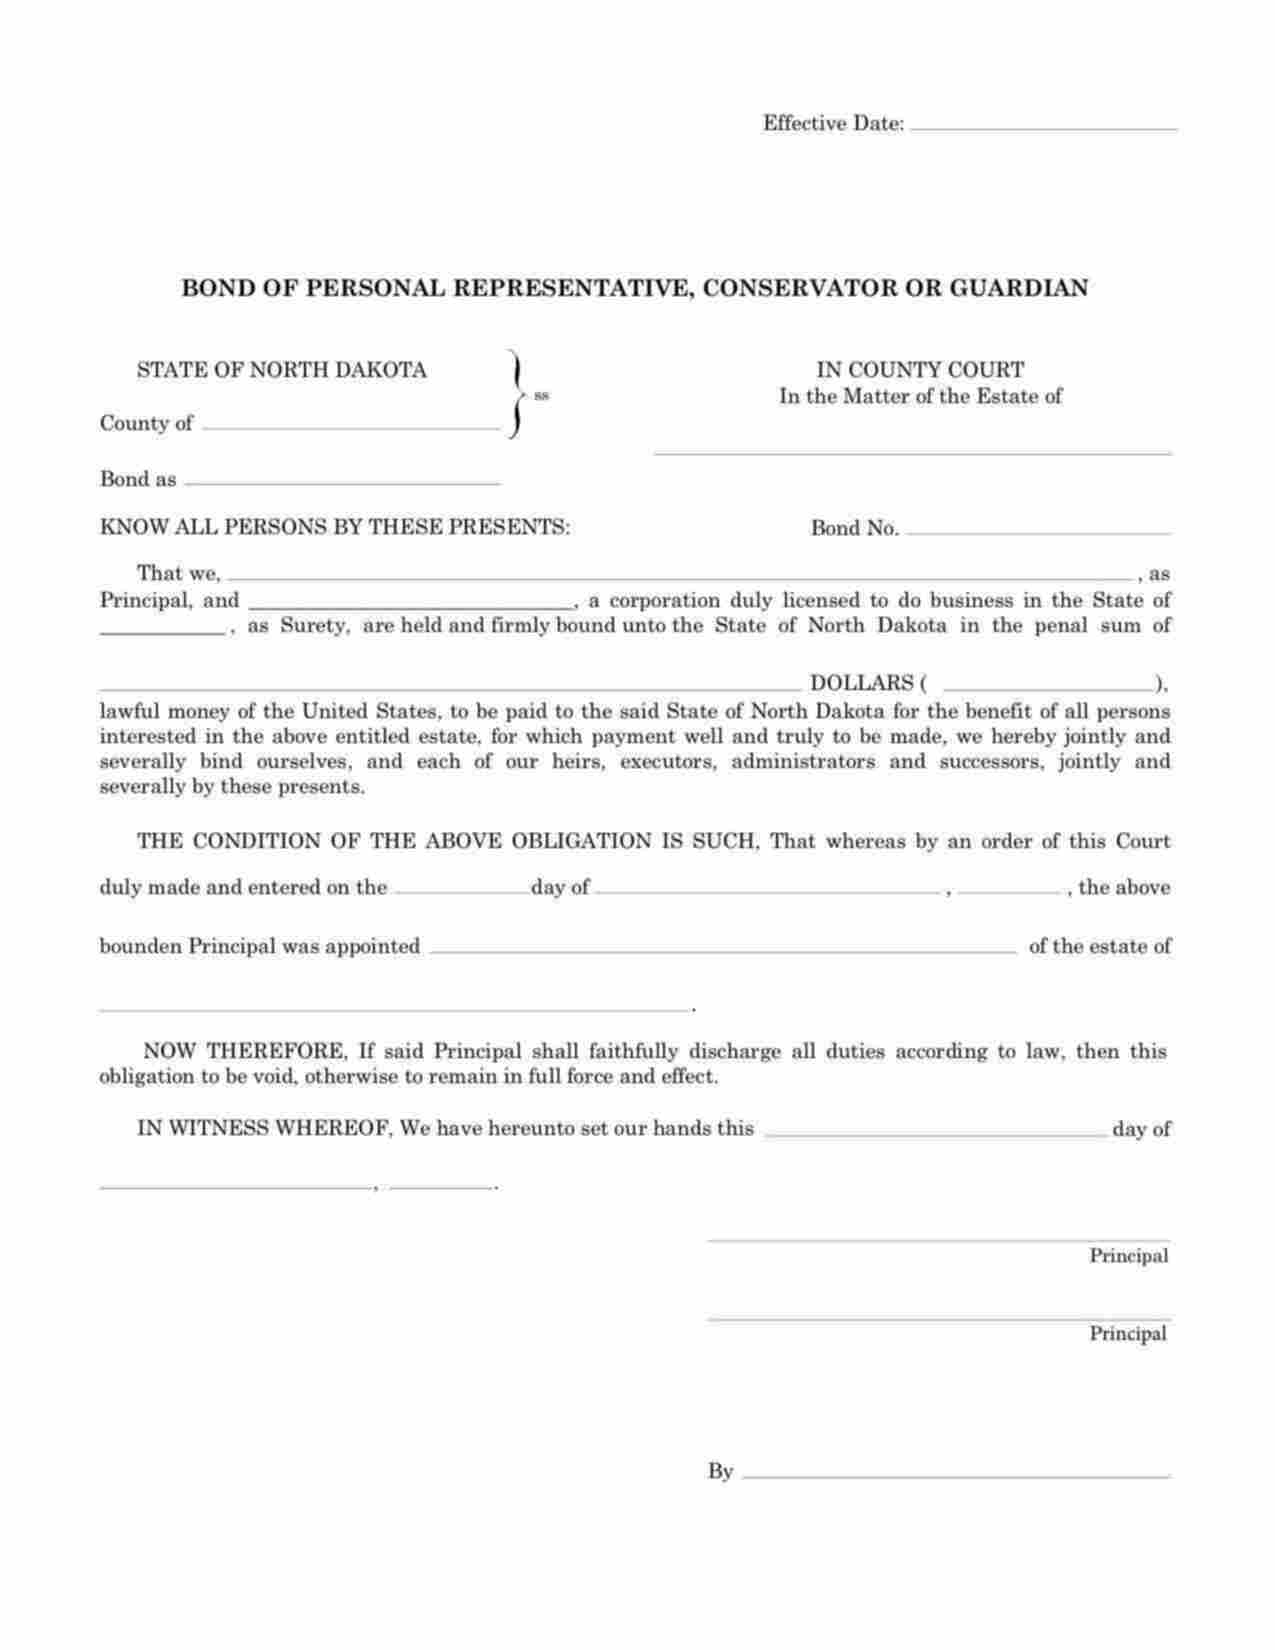 North Dakota Personal Representative Bond Form